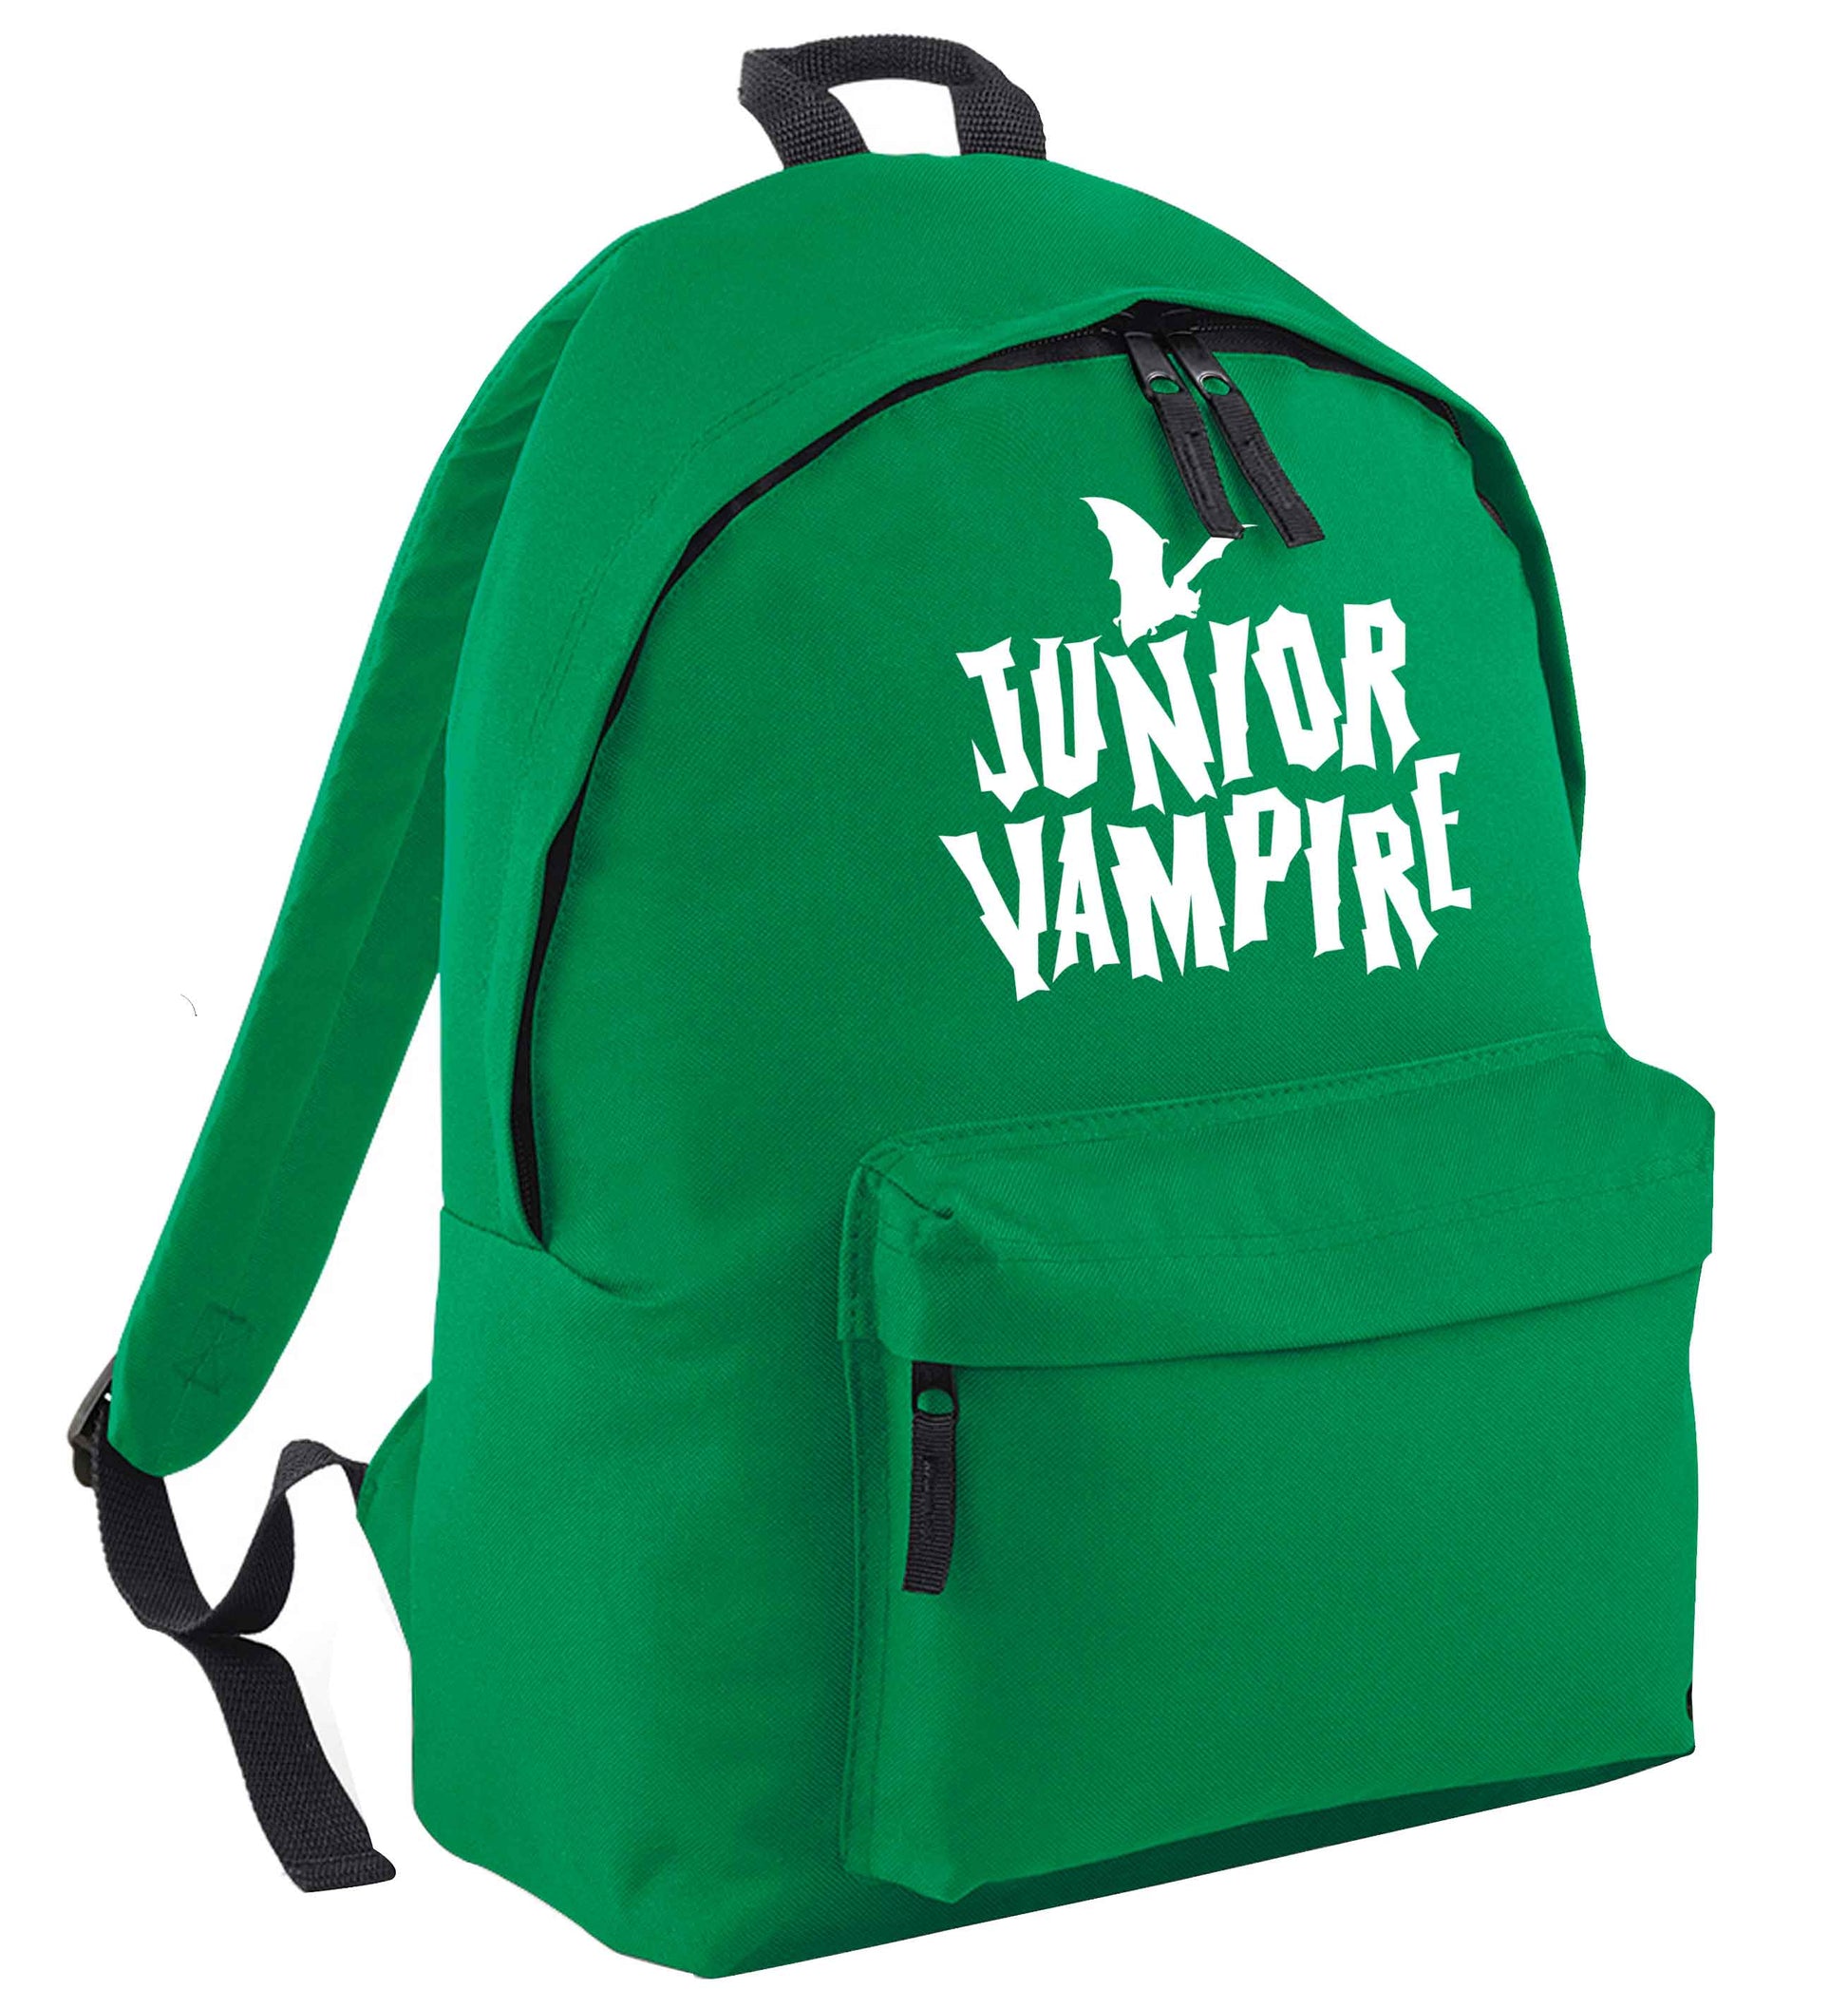 Junior vampire green adults backpack